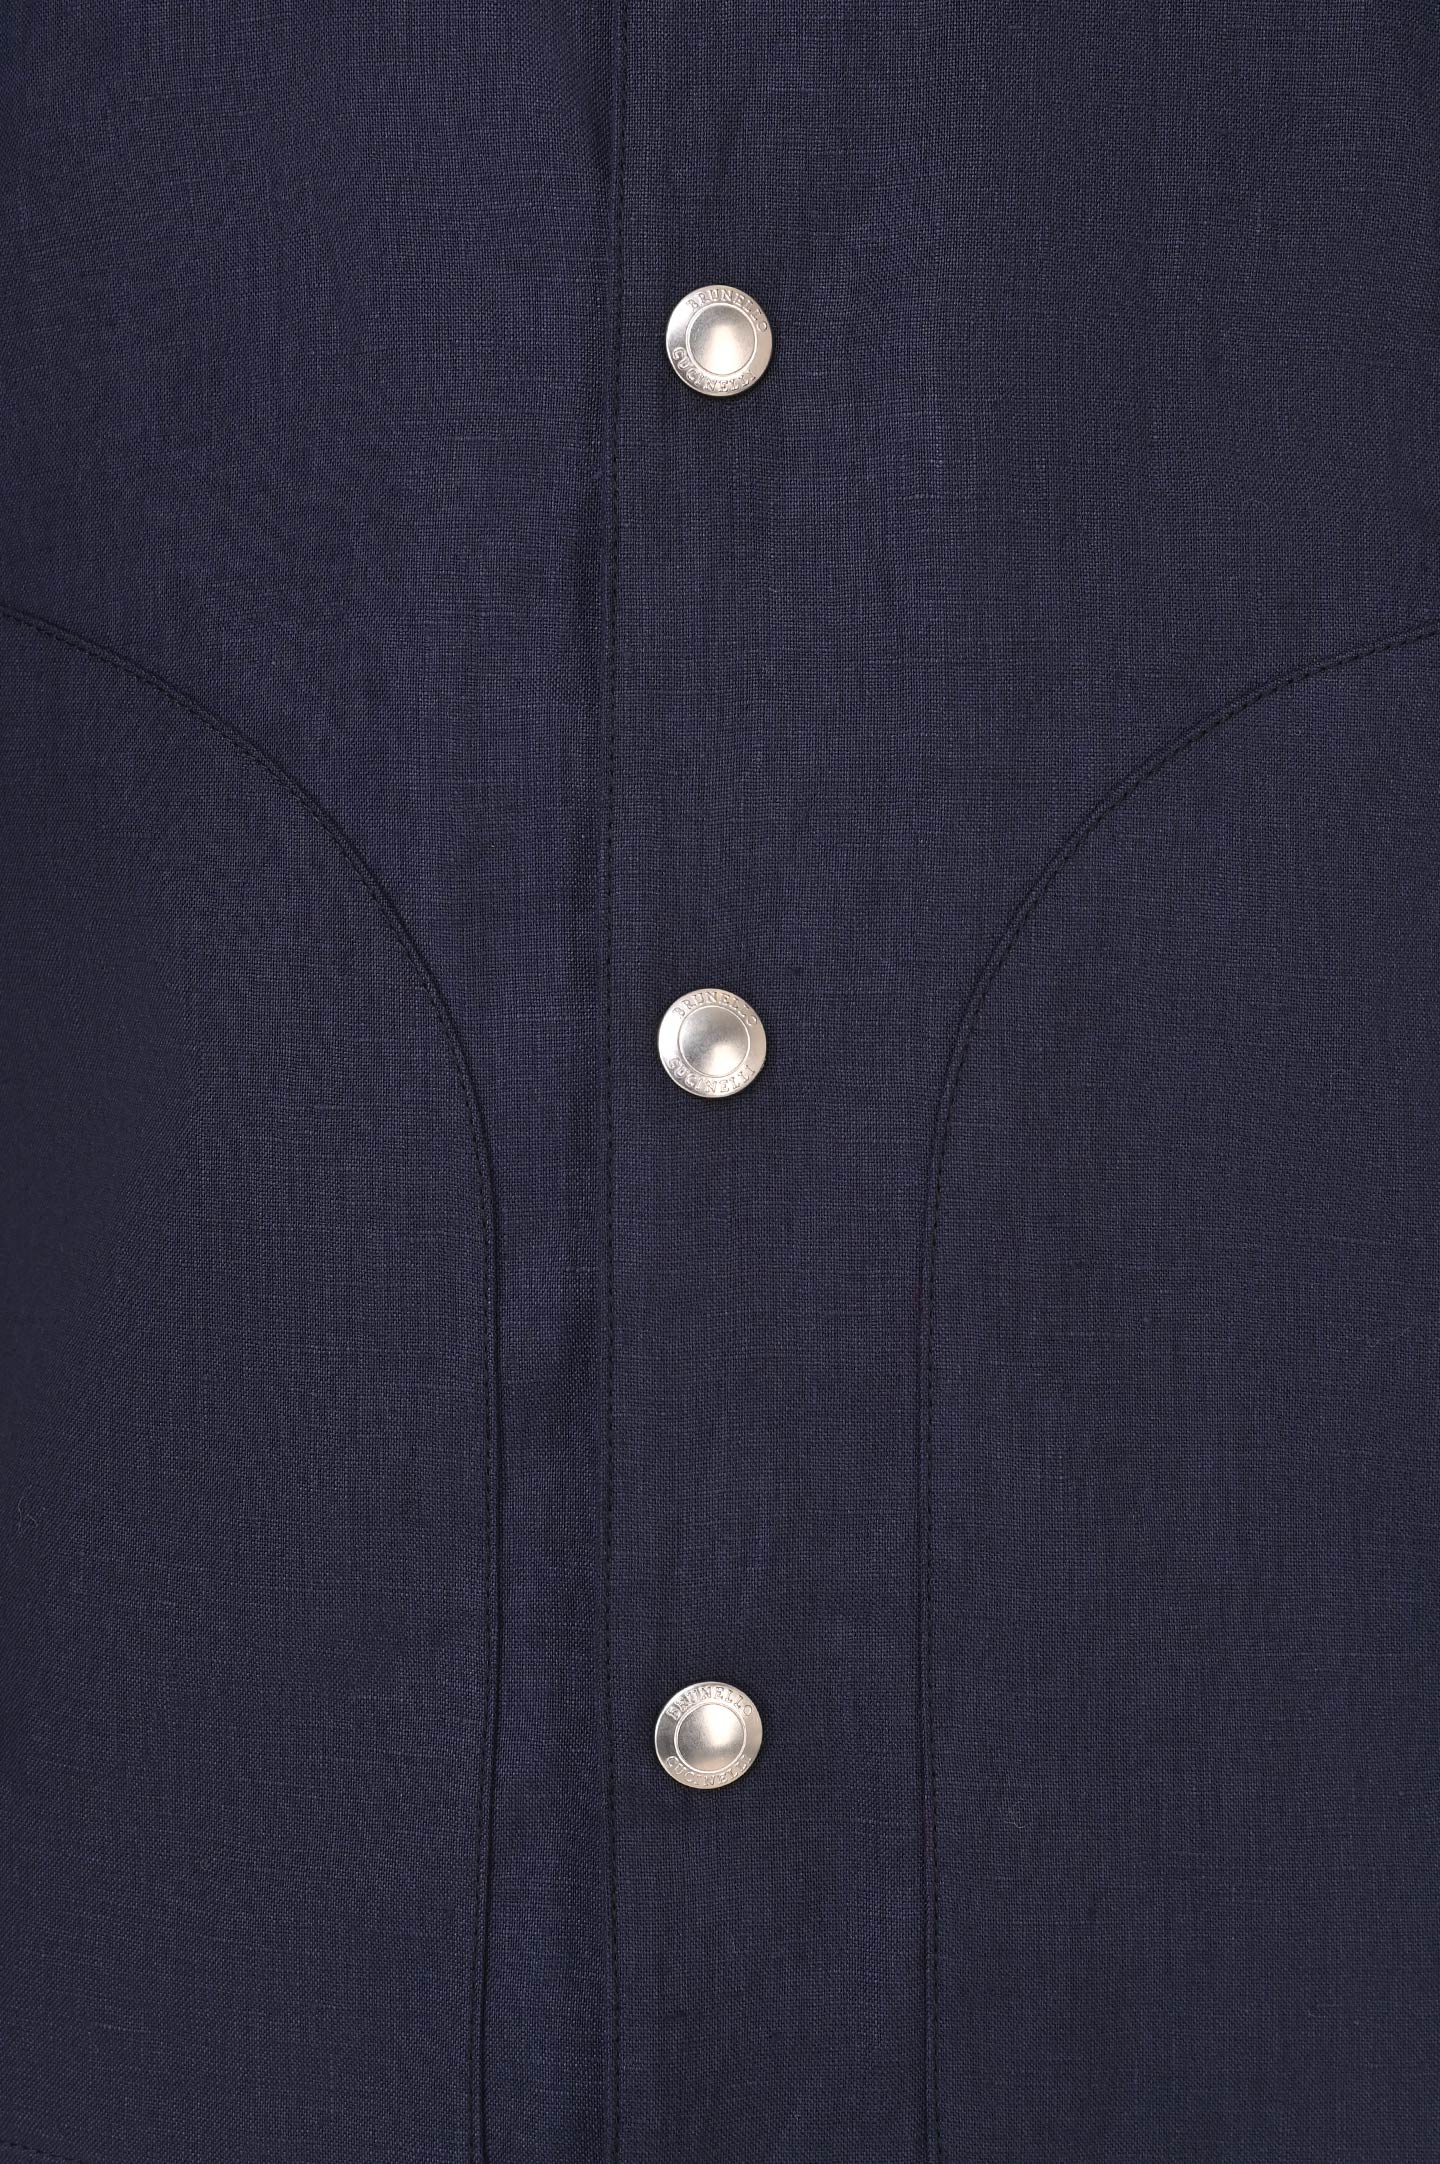 Куртка BRUNELLO  CUCINELLI MW4886174, цвет: Синий, Мужской